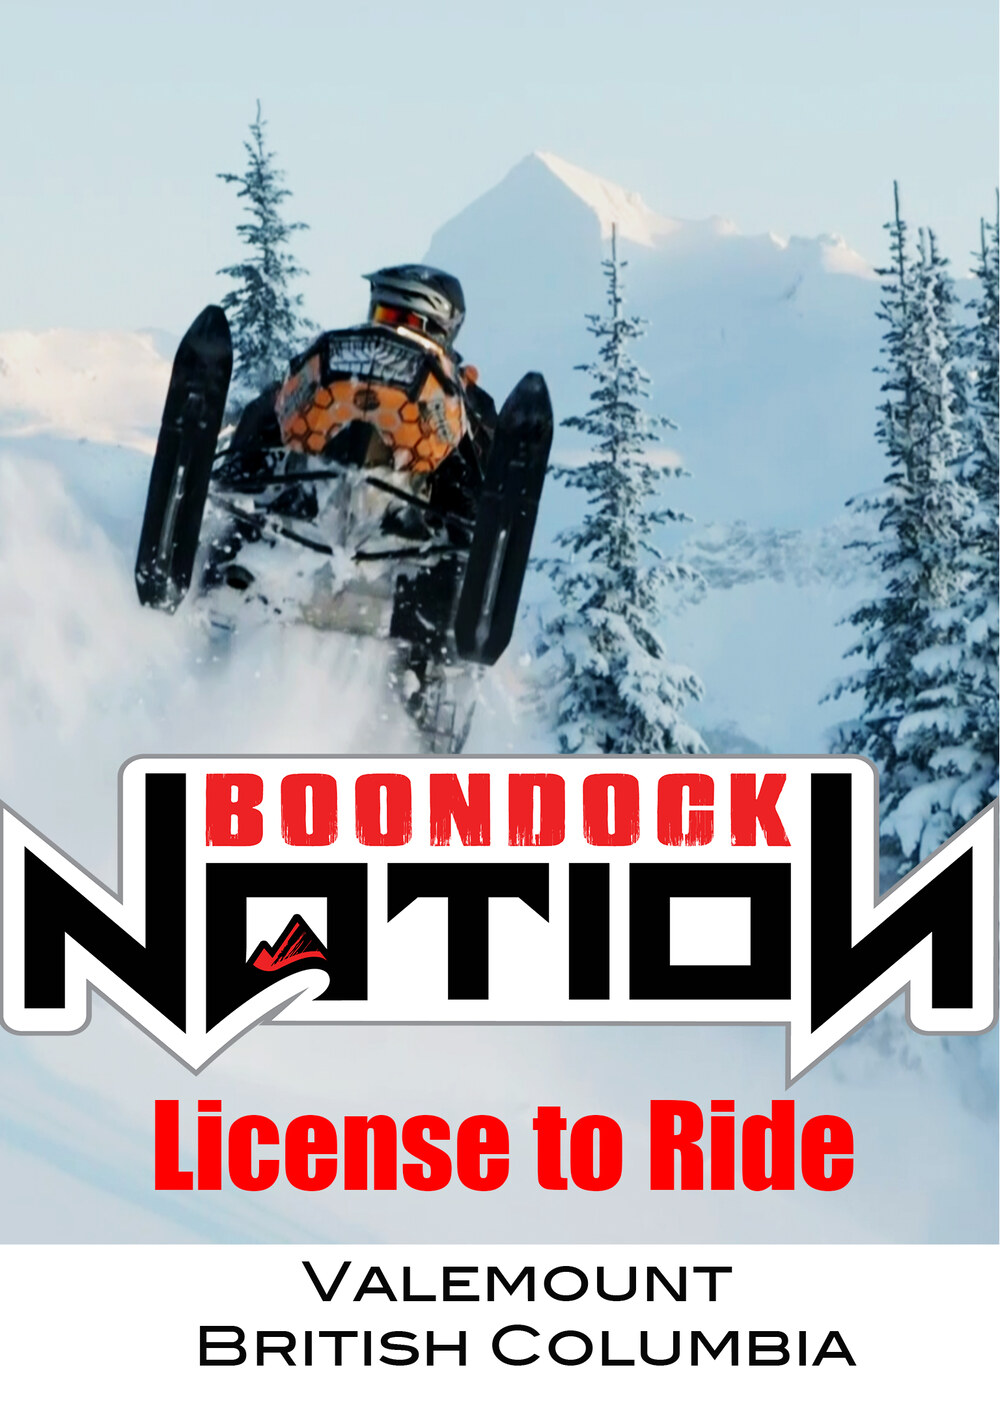 K5043 - License to Ride - Valemount, British Columbia